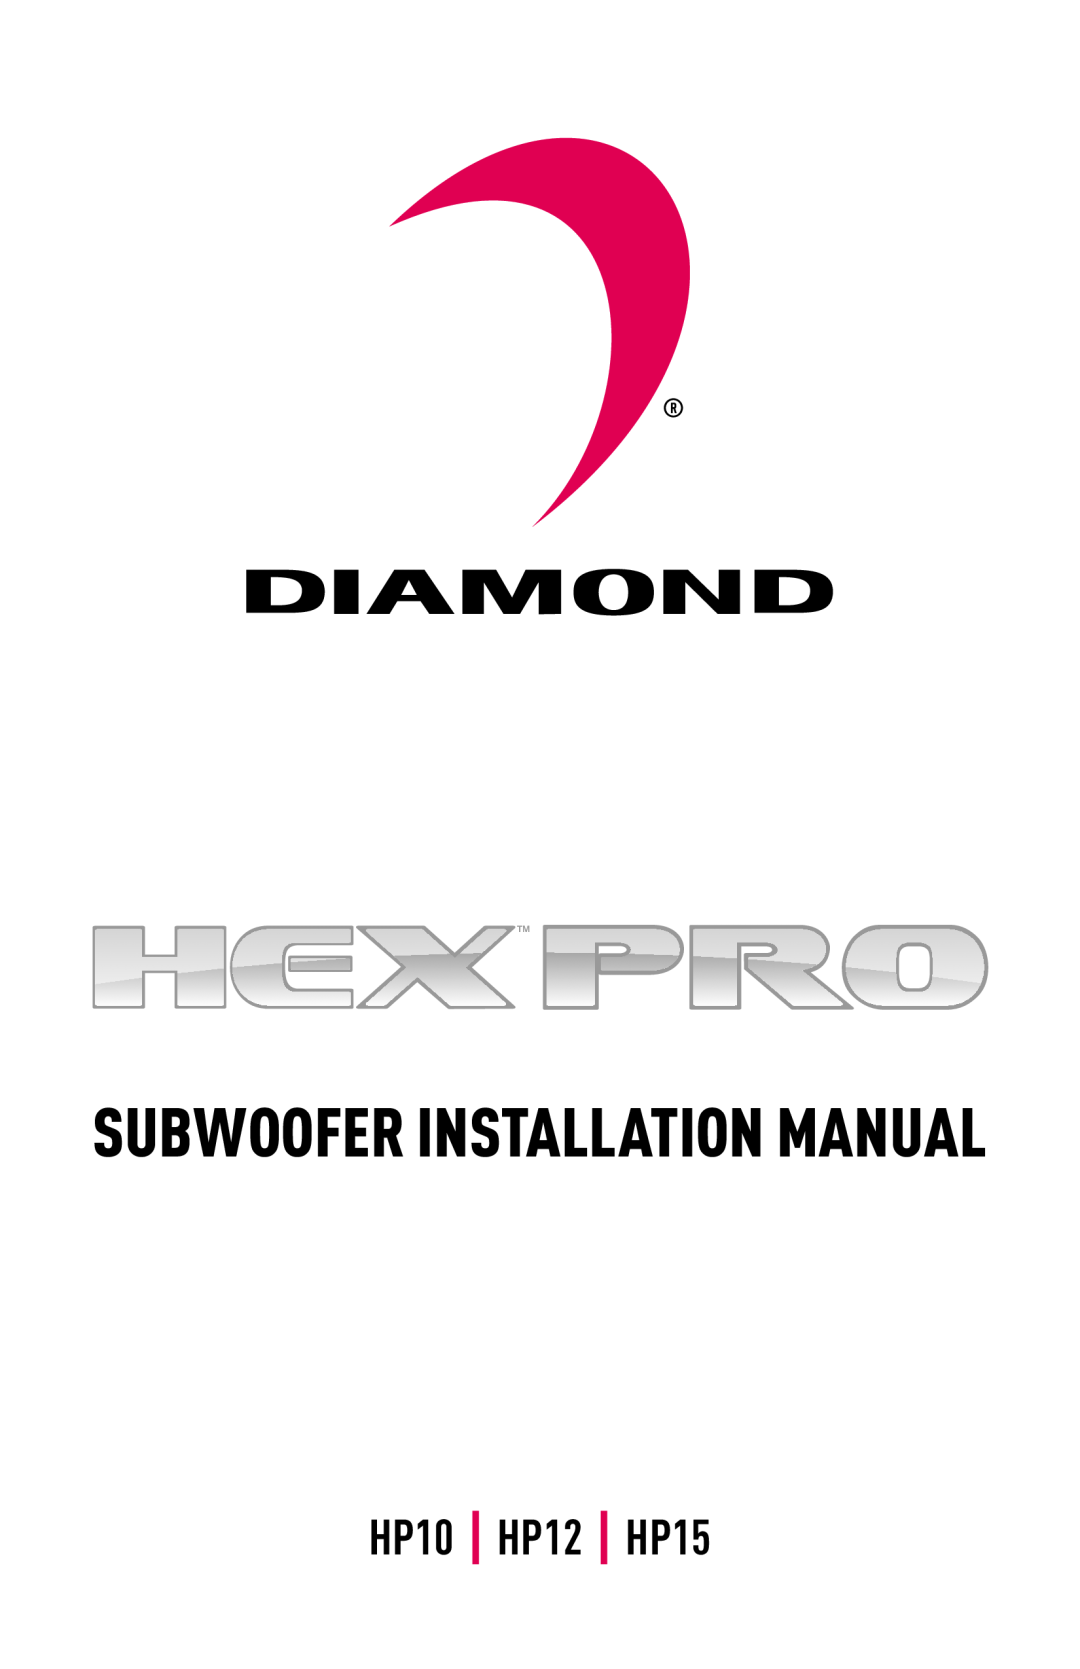 Diamond installation manual Subwoofer Installation Manual, HP10 HP12 HP15 